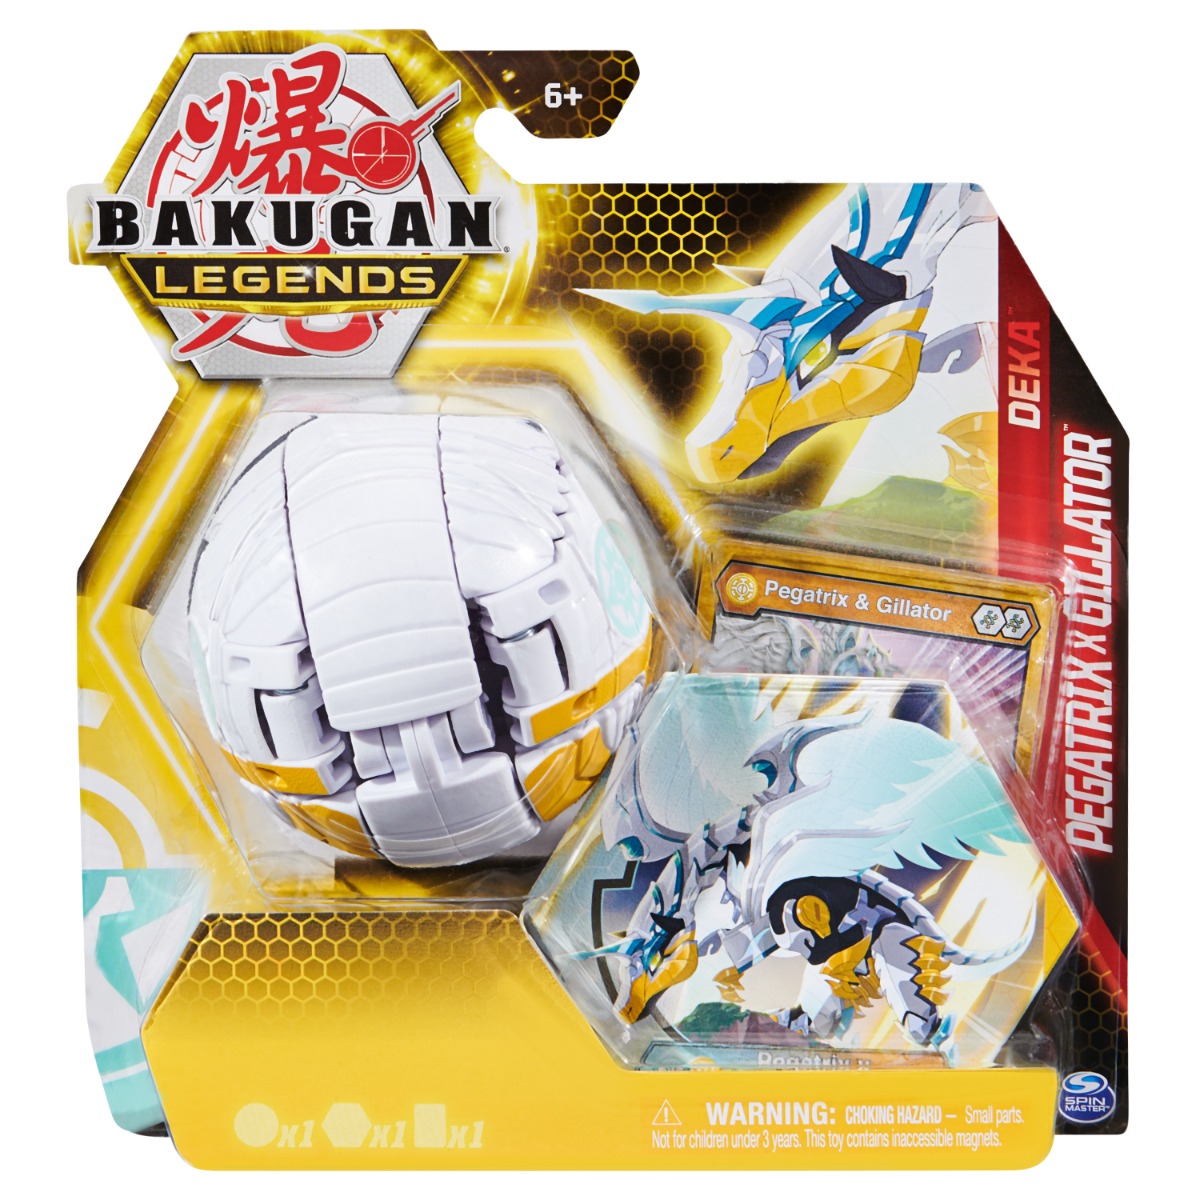 Figurina Deka Bakugan Legends, Pegatrix Gillator, 20140293